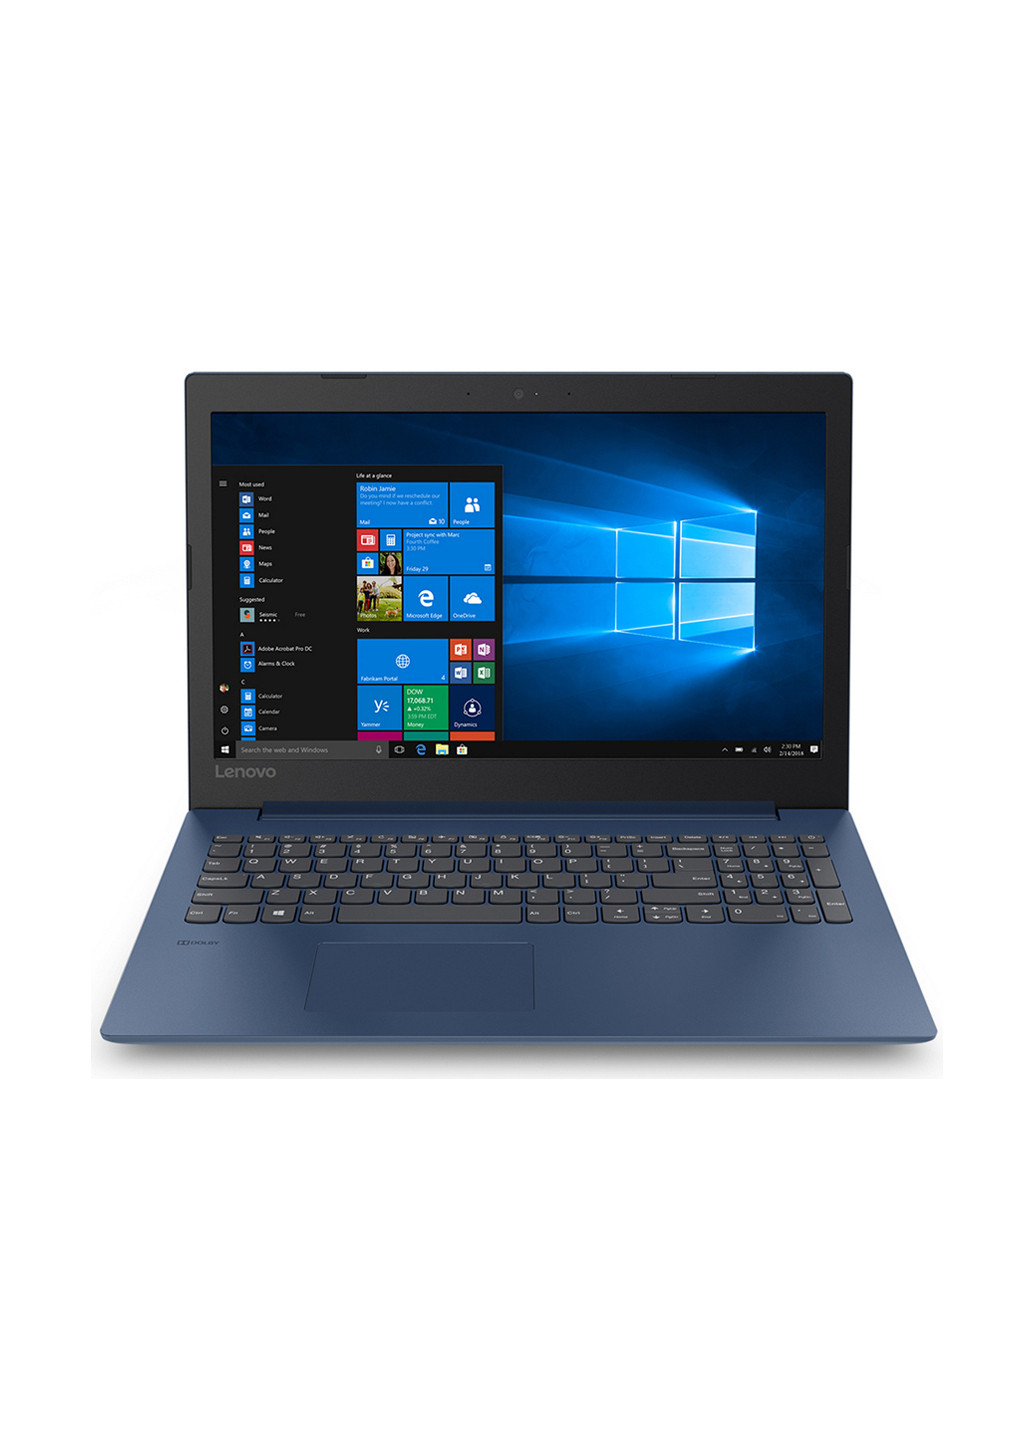 Ноутбук Lenovo ideapad 330-15 (81dc012lra) mid night blue (132994127)